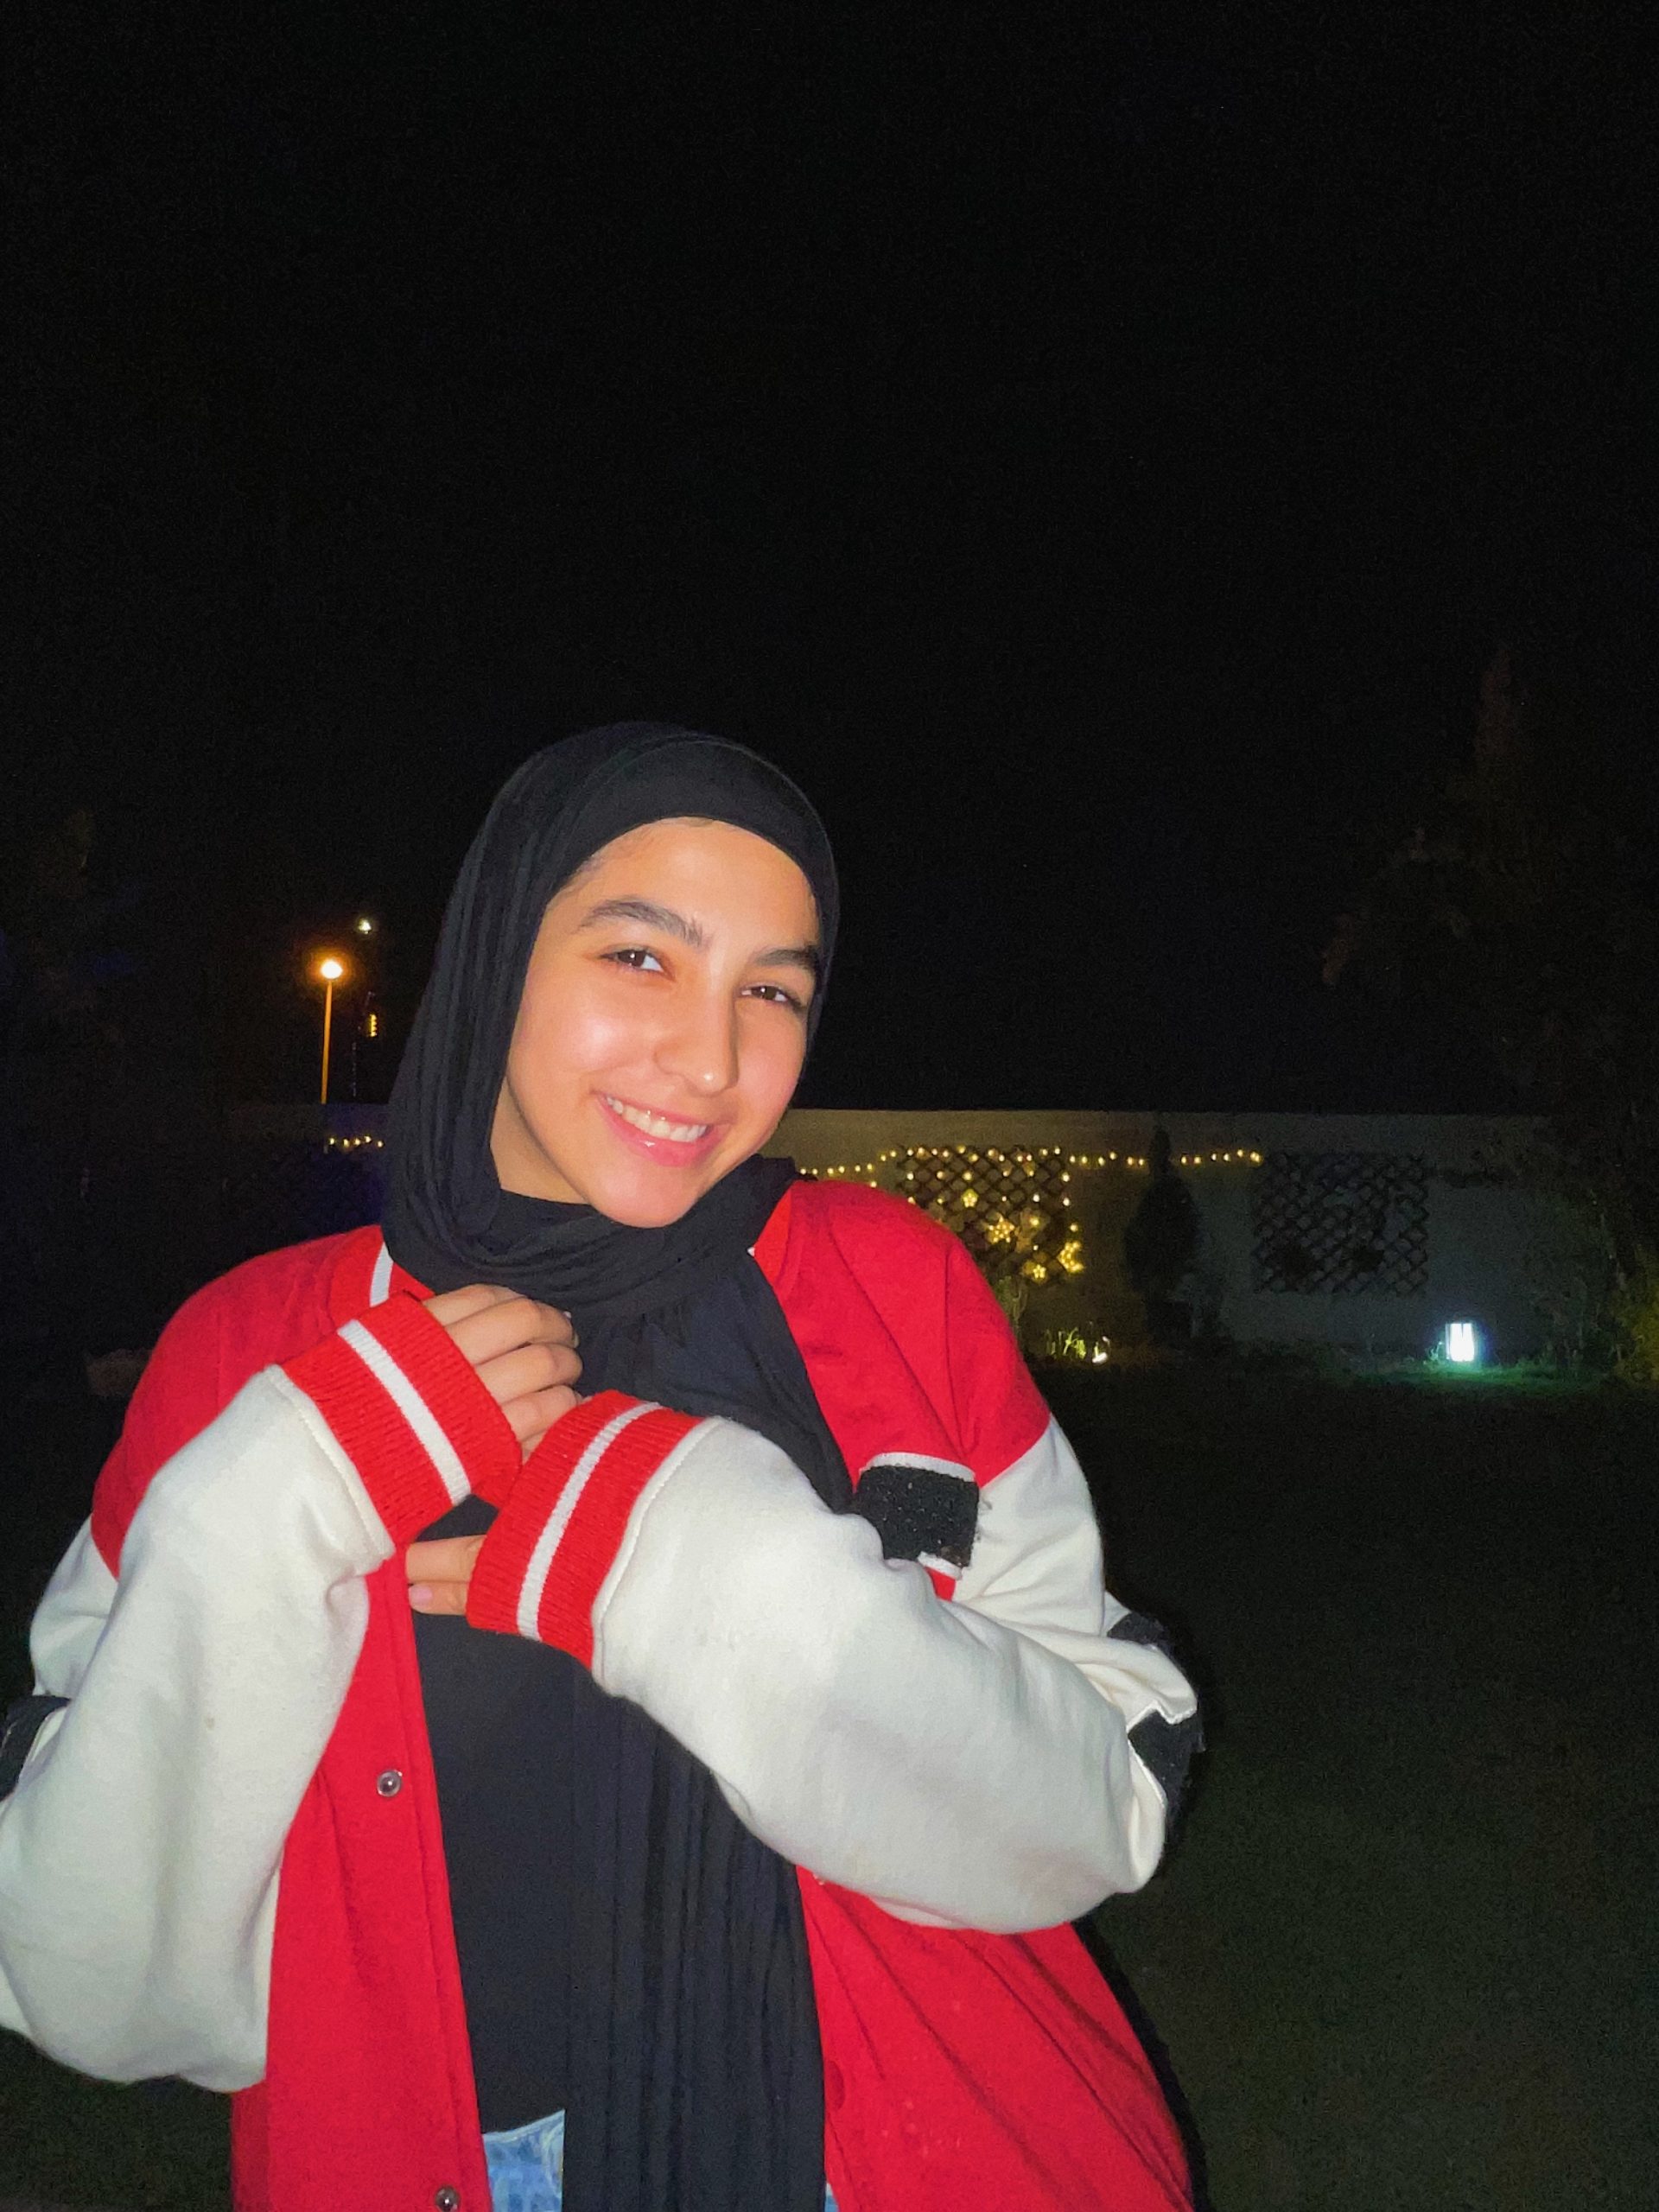 Mariam Badr smiling at night